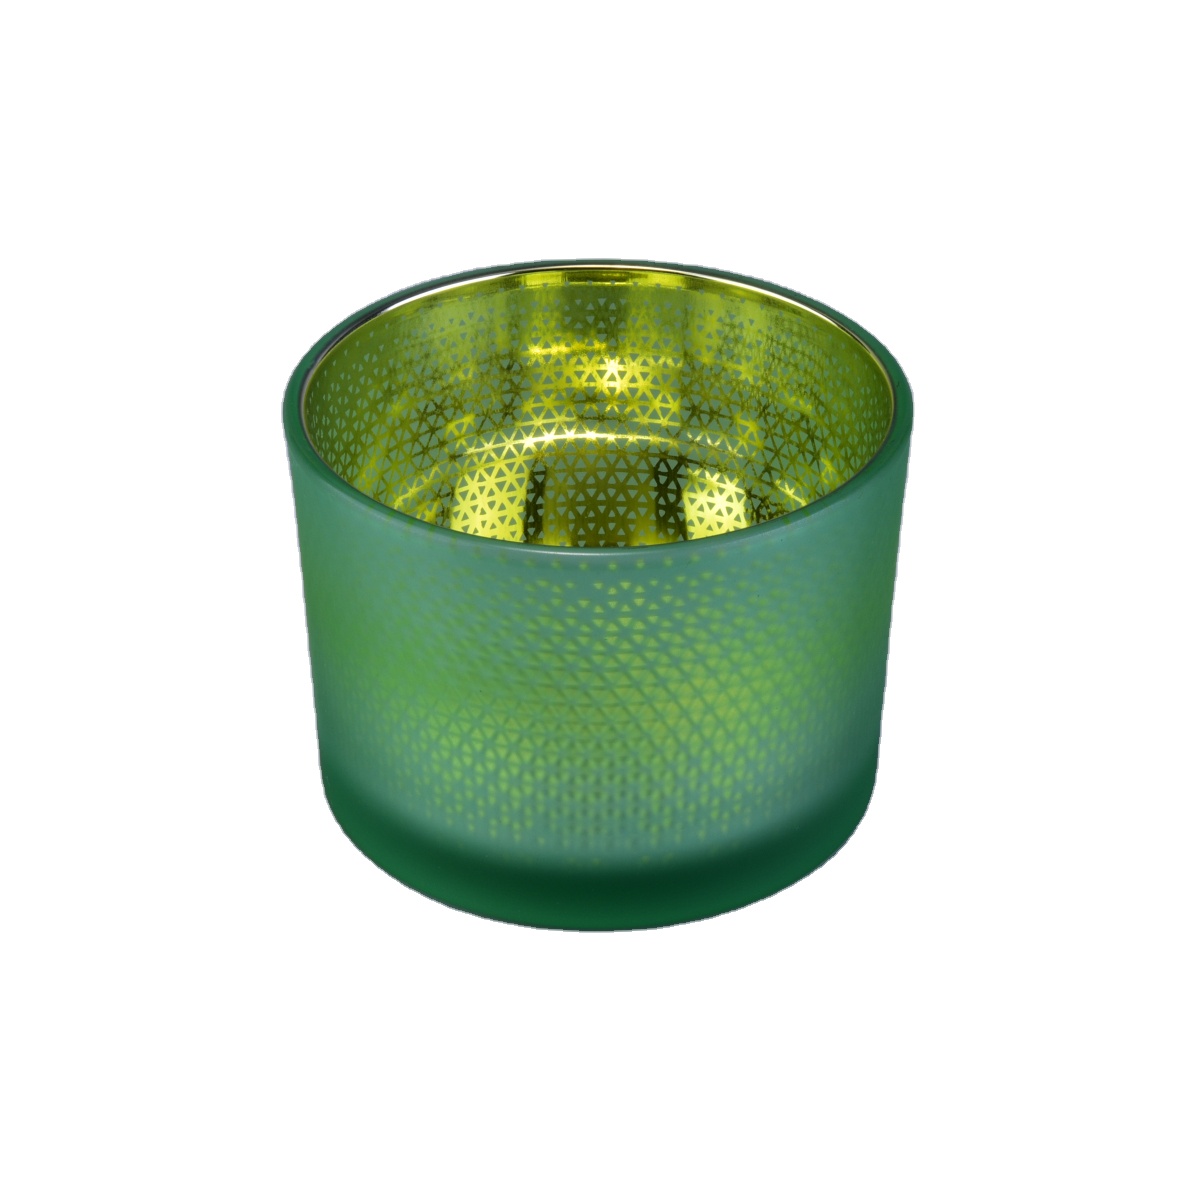 Sunny design luxury empty glass candle jars wholesales